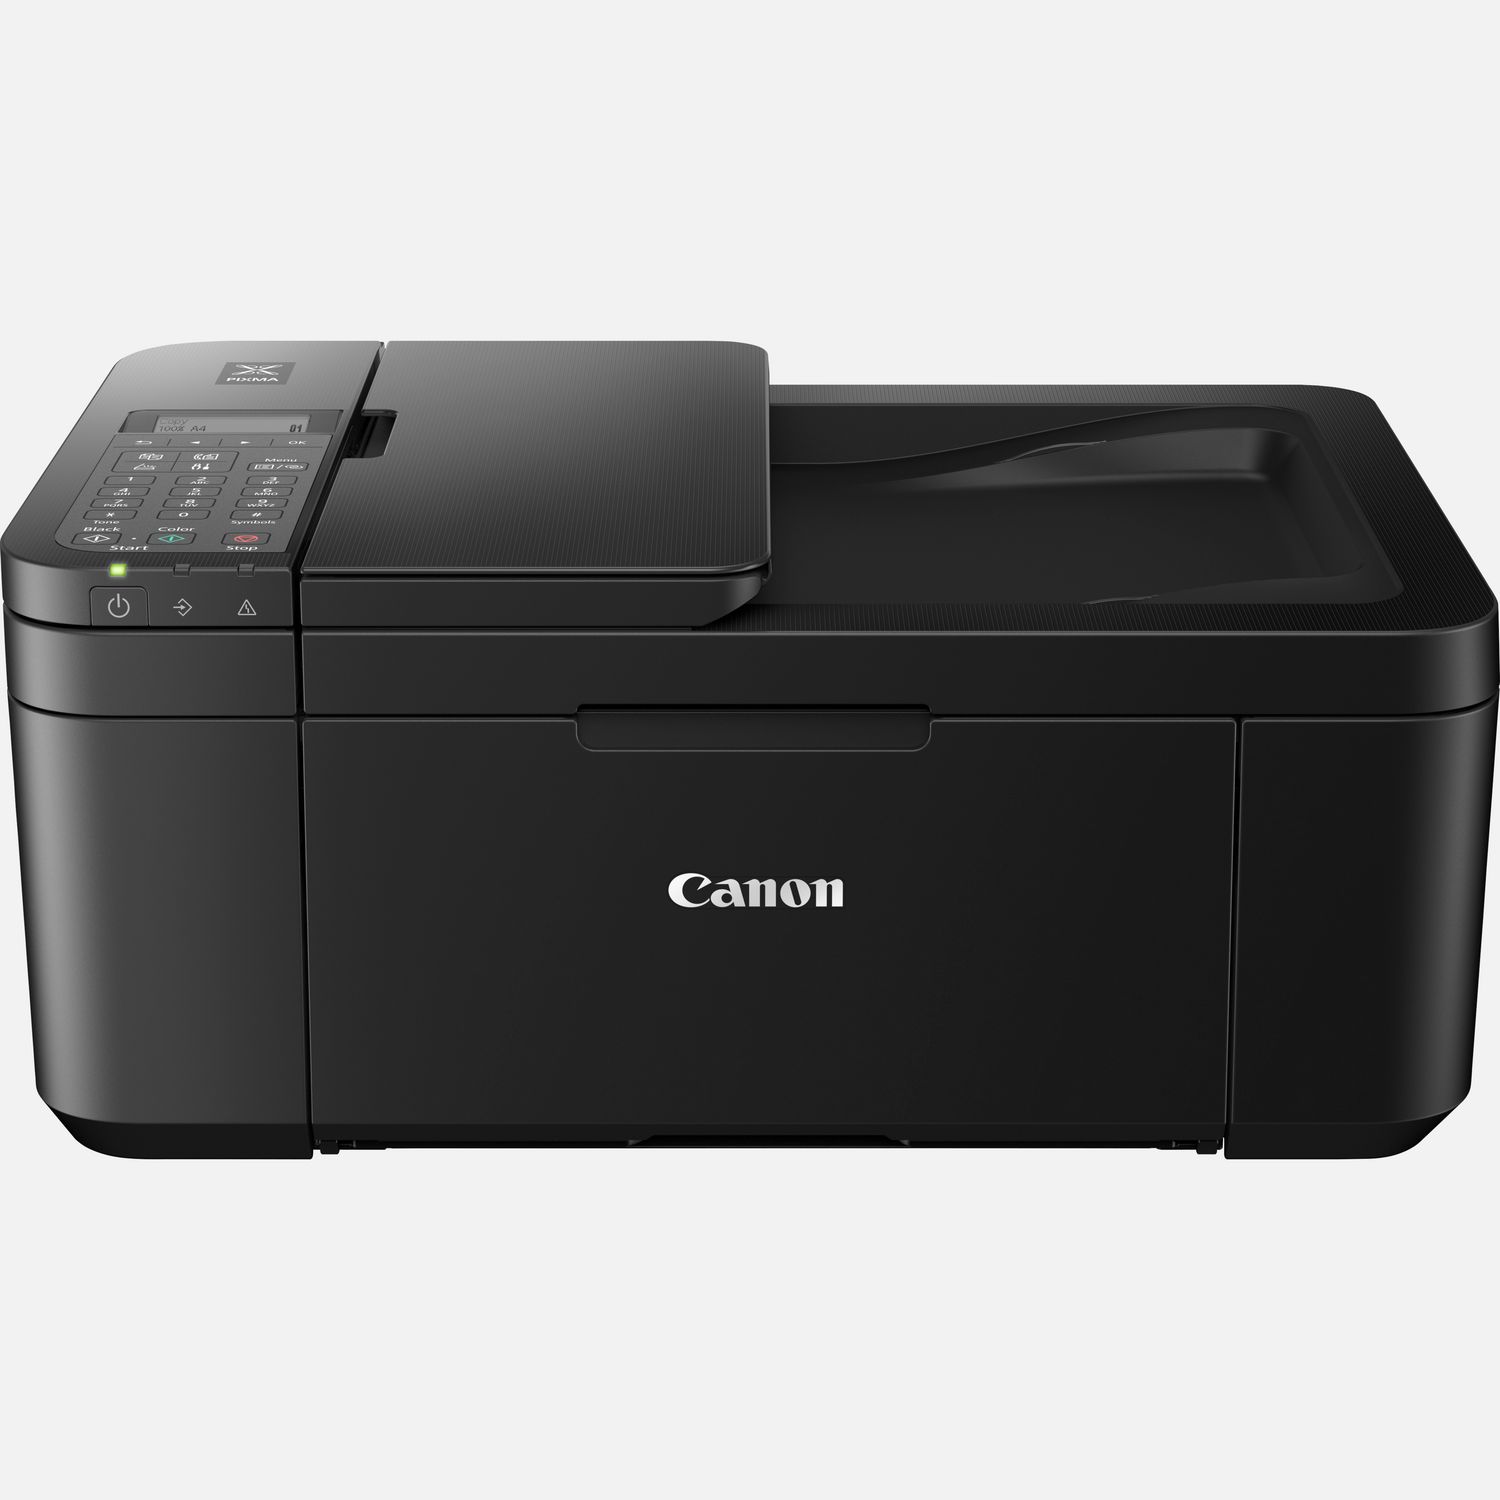 een experiment doen maagd Canada All-in-One printers — Canon Belgie Store